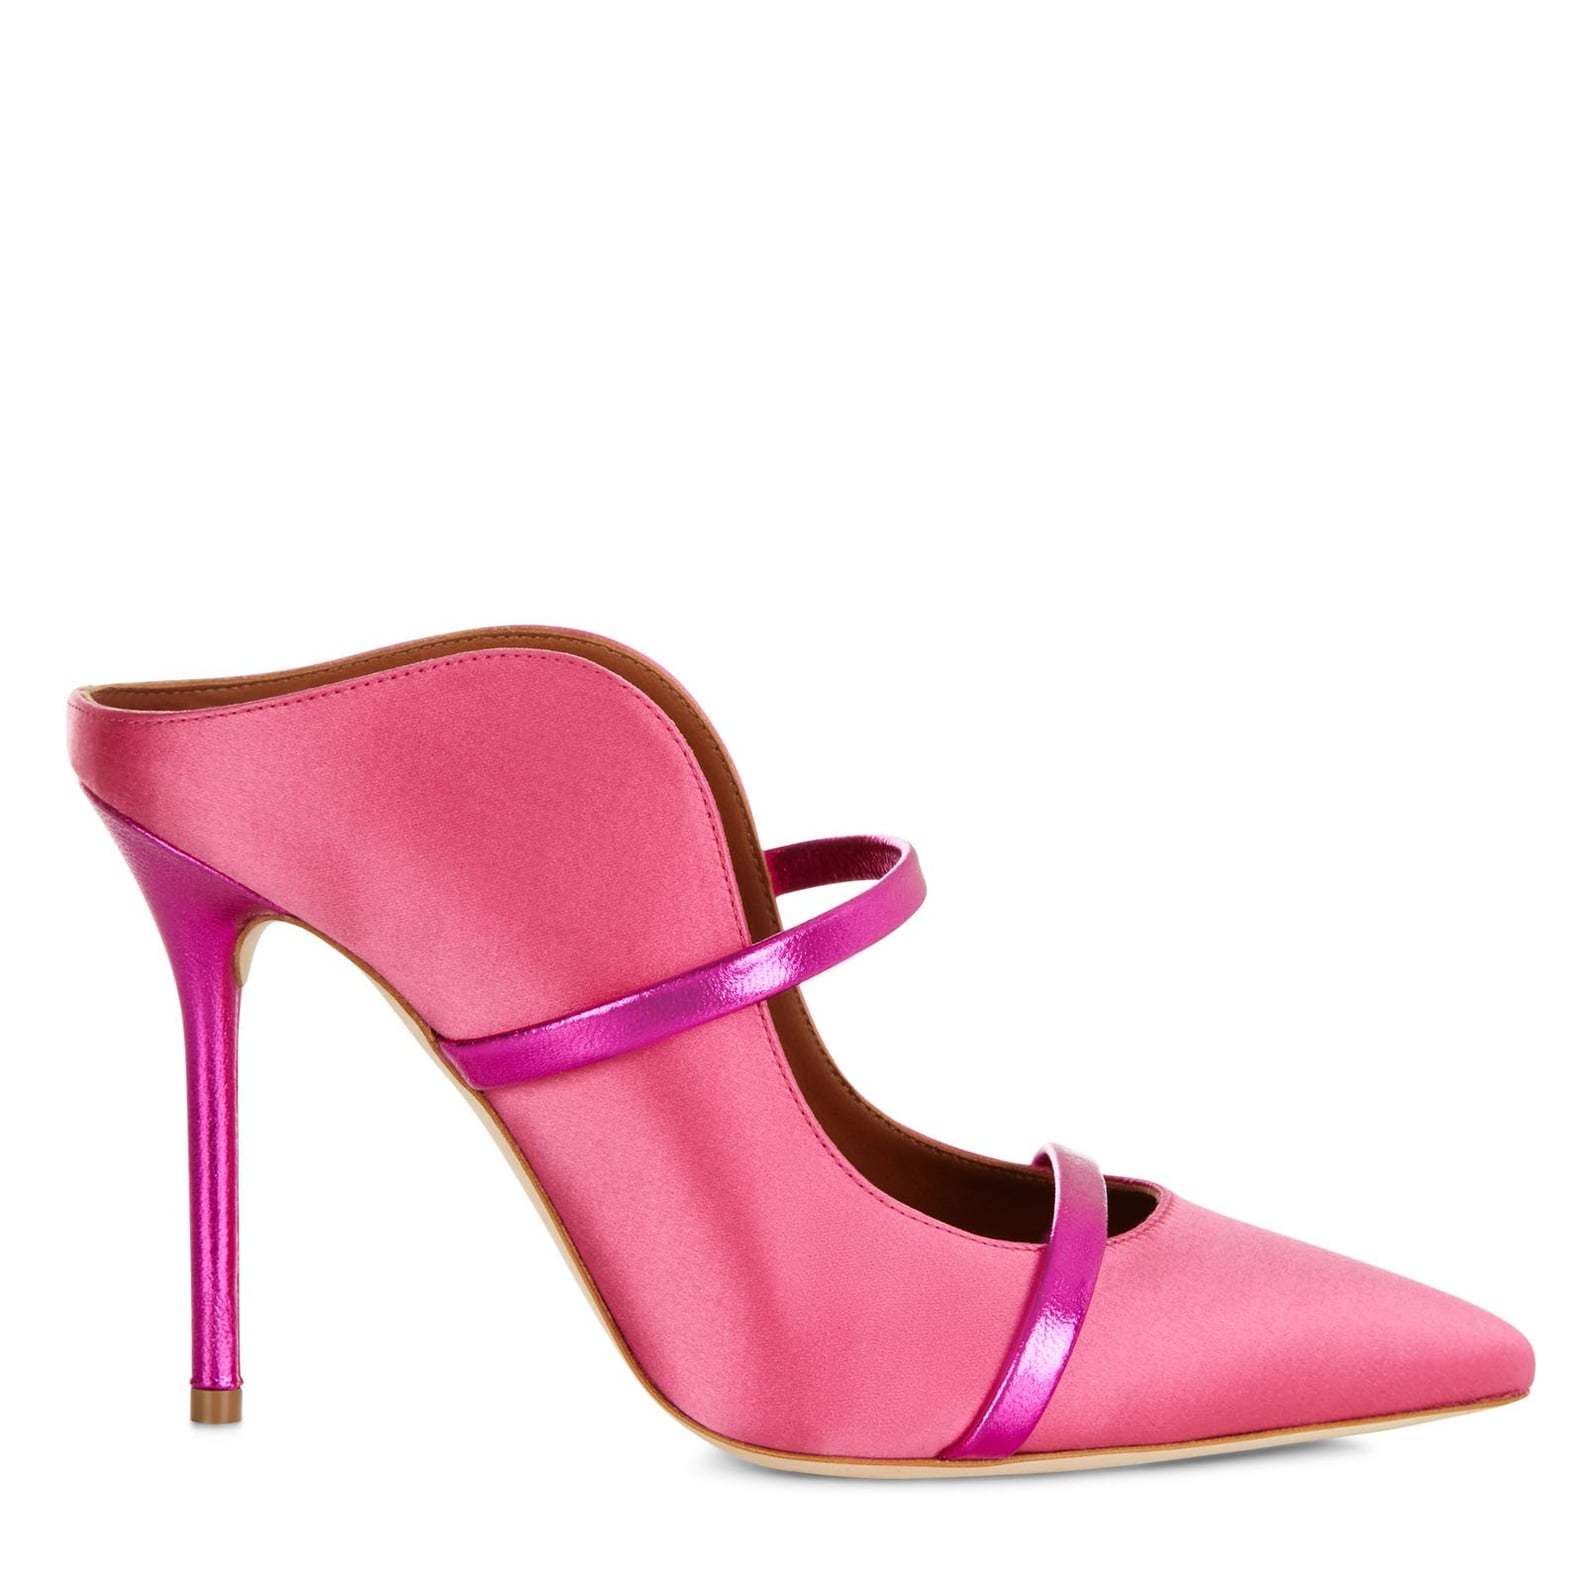 Mindy Kaling's Pink Malone Souliers Heels | POPSUGAR Fashion